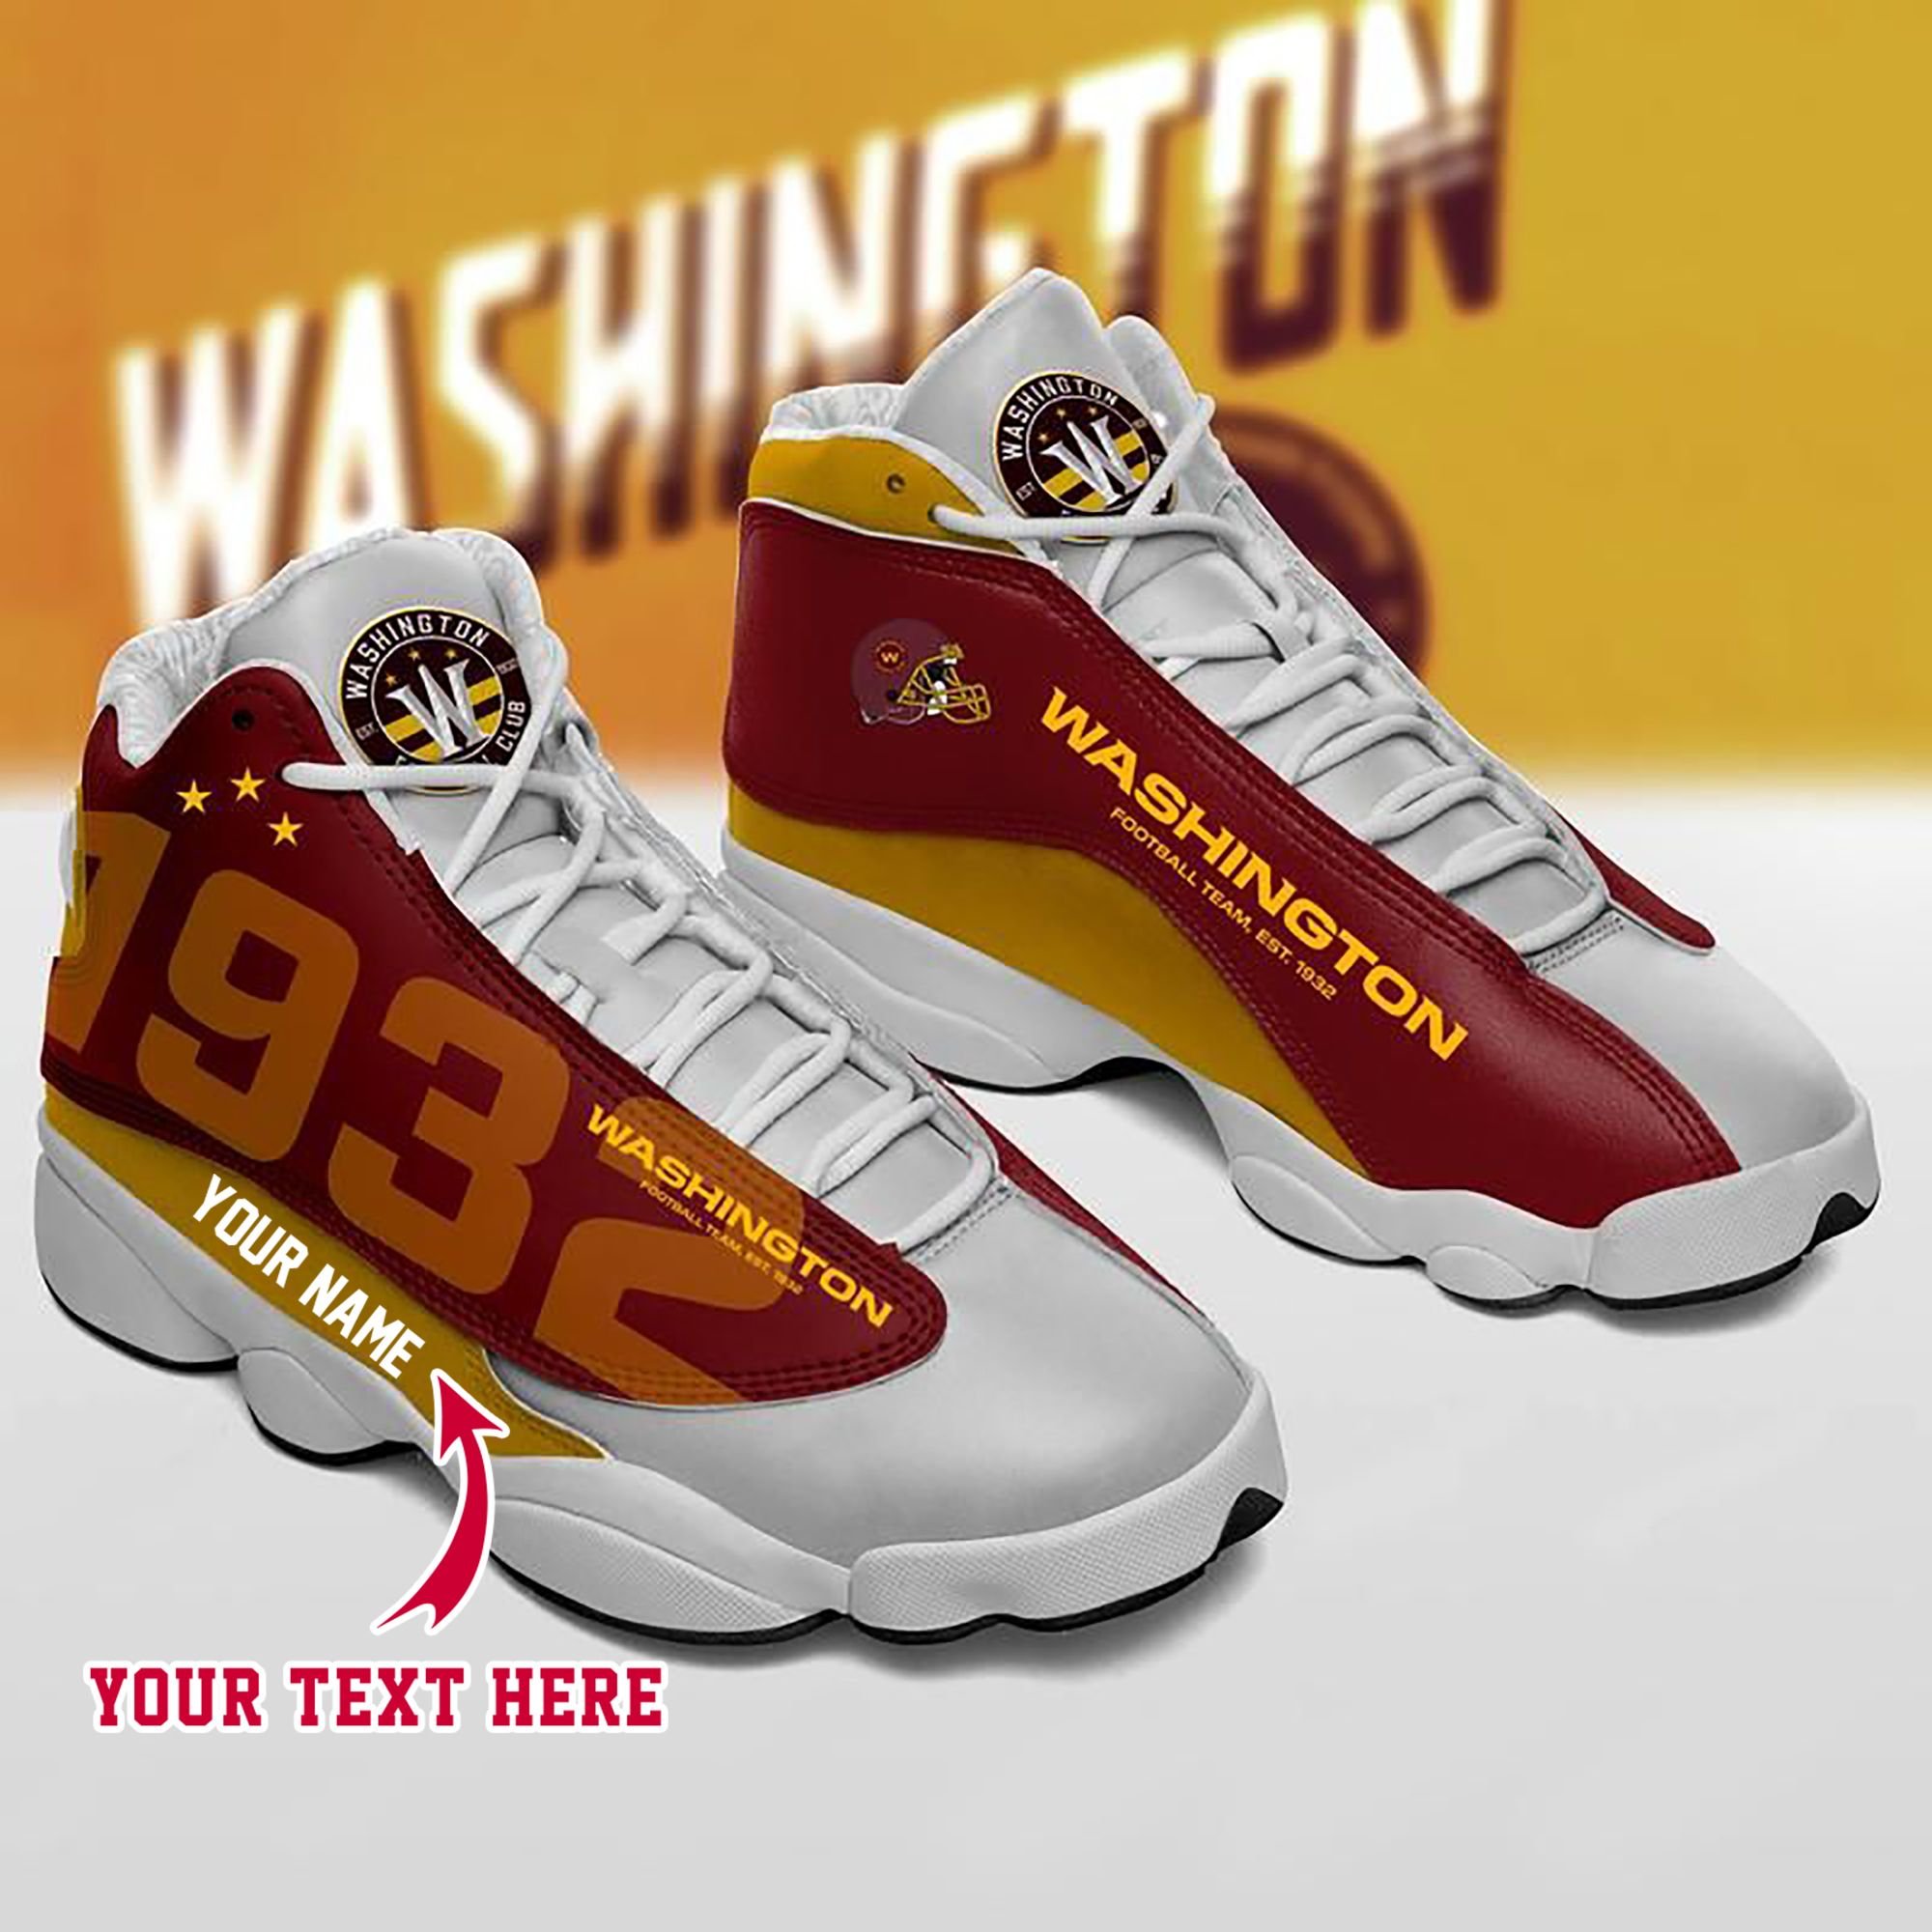 Buy Washington Football Football NFL Retro AJ13 Sneakers Customized Shoes